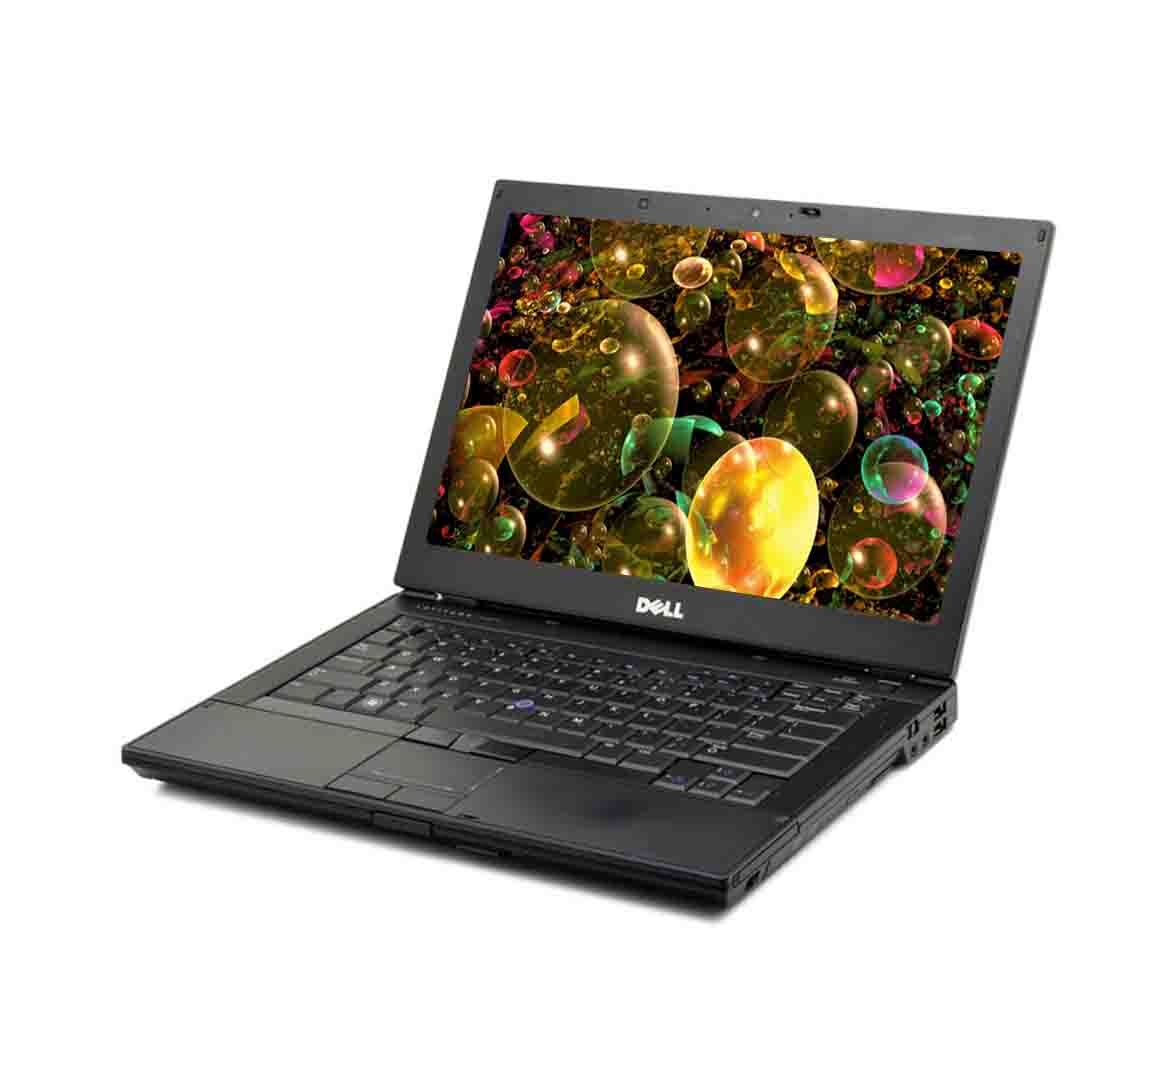 Dell Latitude E6420 Laptop, Intel Core i7-2nd Gen CPU, 4GB RAM, 320GB HDD, 14 inch Display, Nvidia NVS 4200M, Win10 Pro, Refurbished Laptop